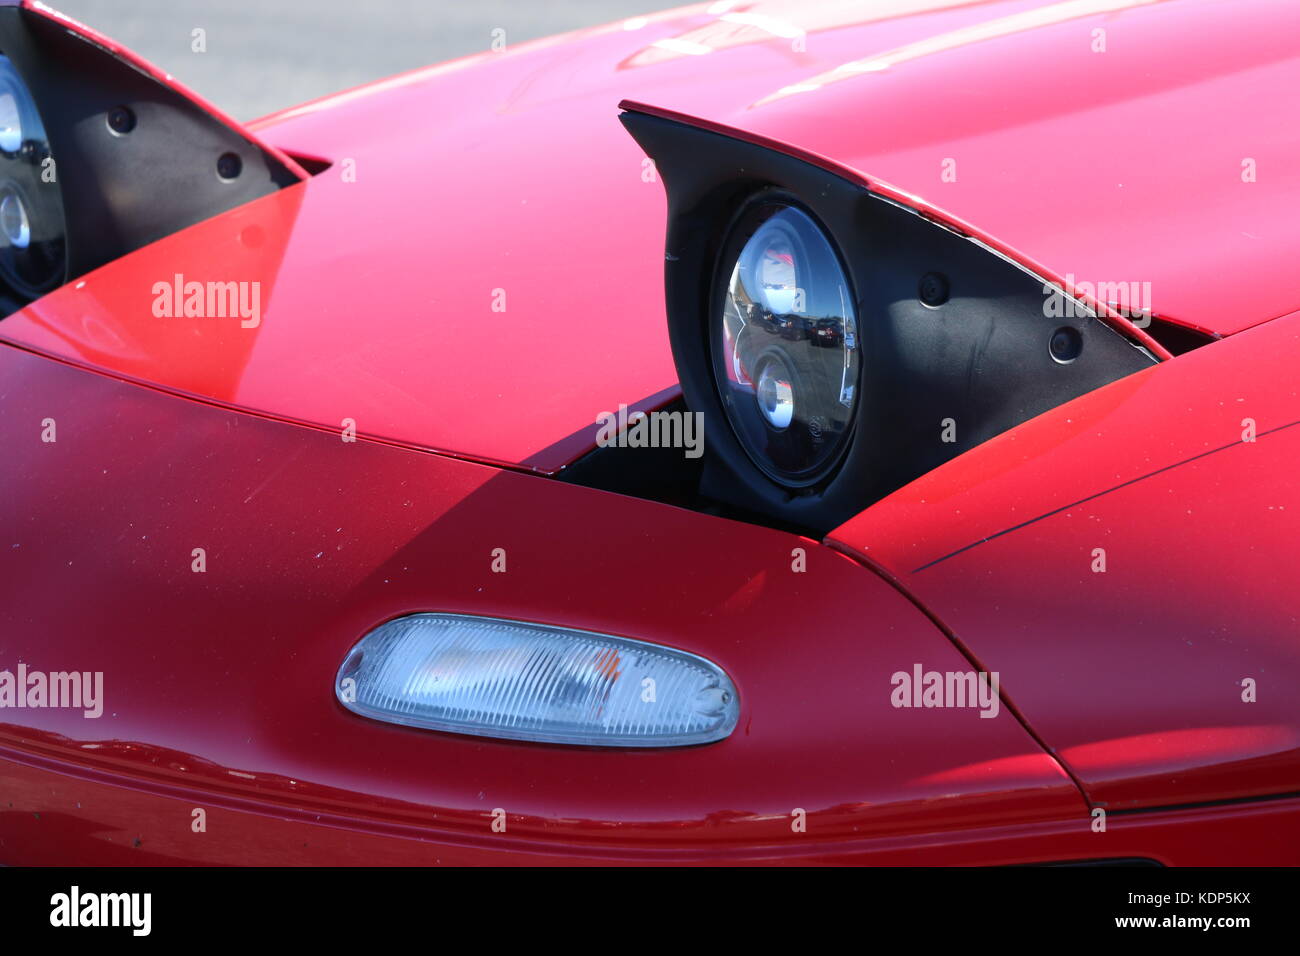 Pop up headlights on a red Mazda Miata Stock Photo - Alamy